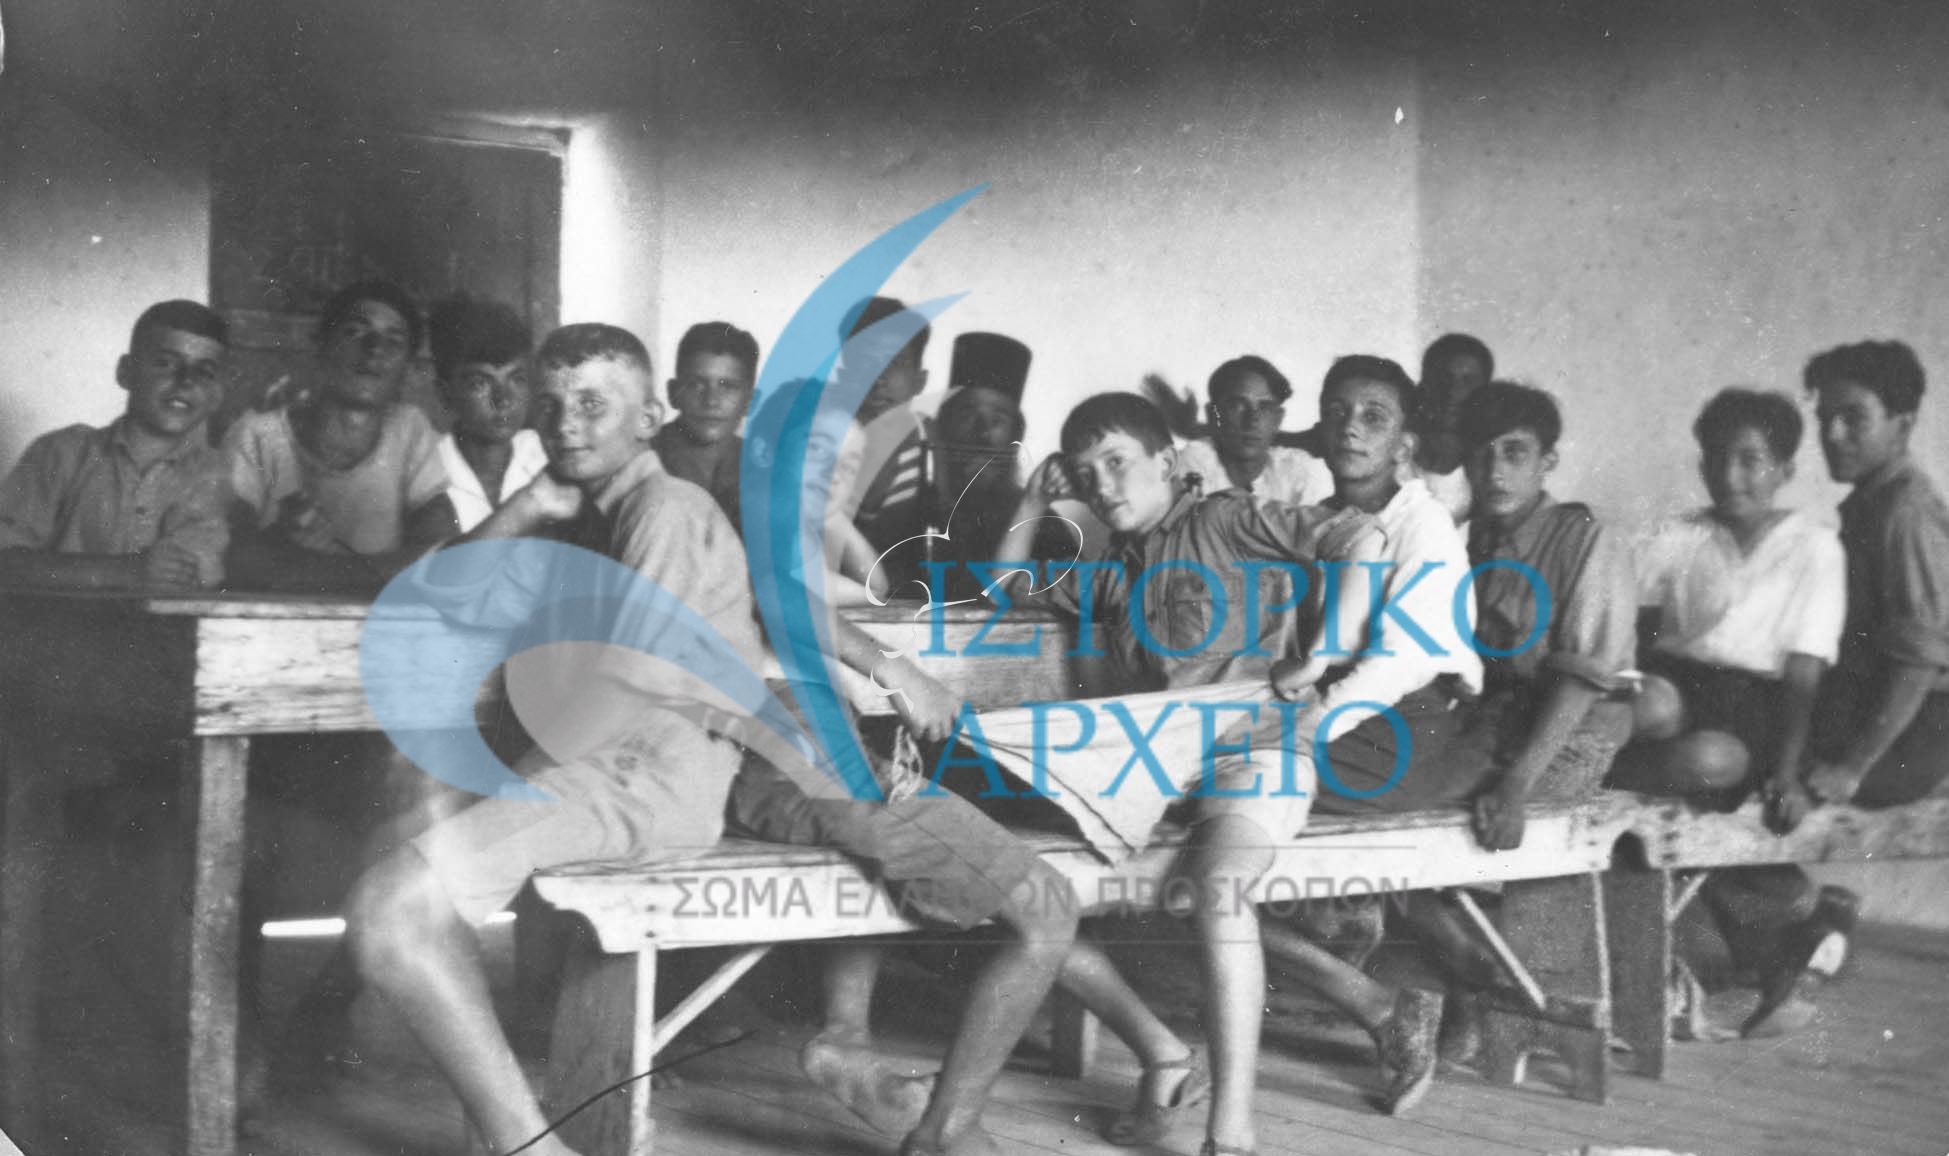 H 2η Ομάδα Προσκόπων Κερκύρας σε 3ήμερη εκδρομή στη Παλόκαστρίτσα από τις 13 μέχρι τις 15 Σεπτεμβρίου του 1929